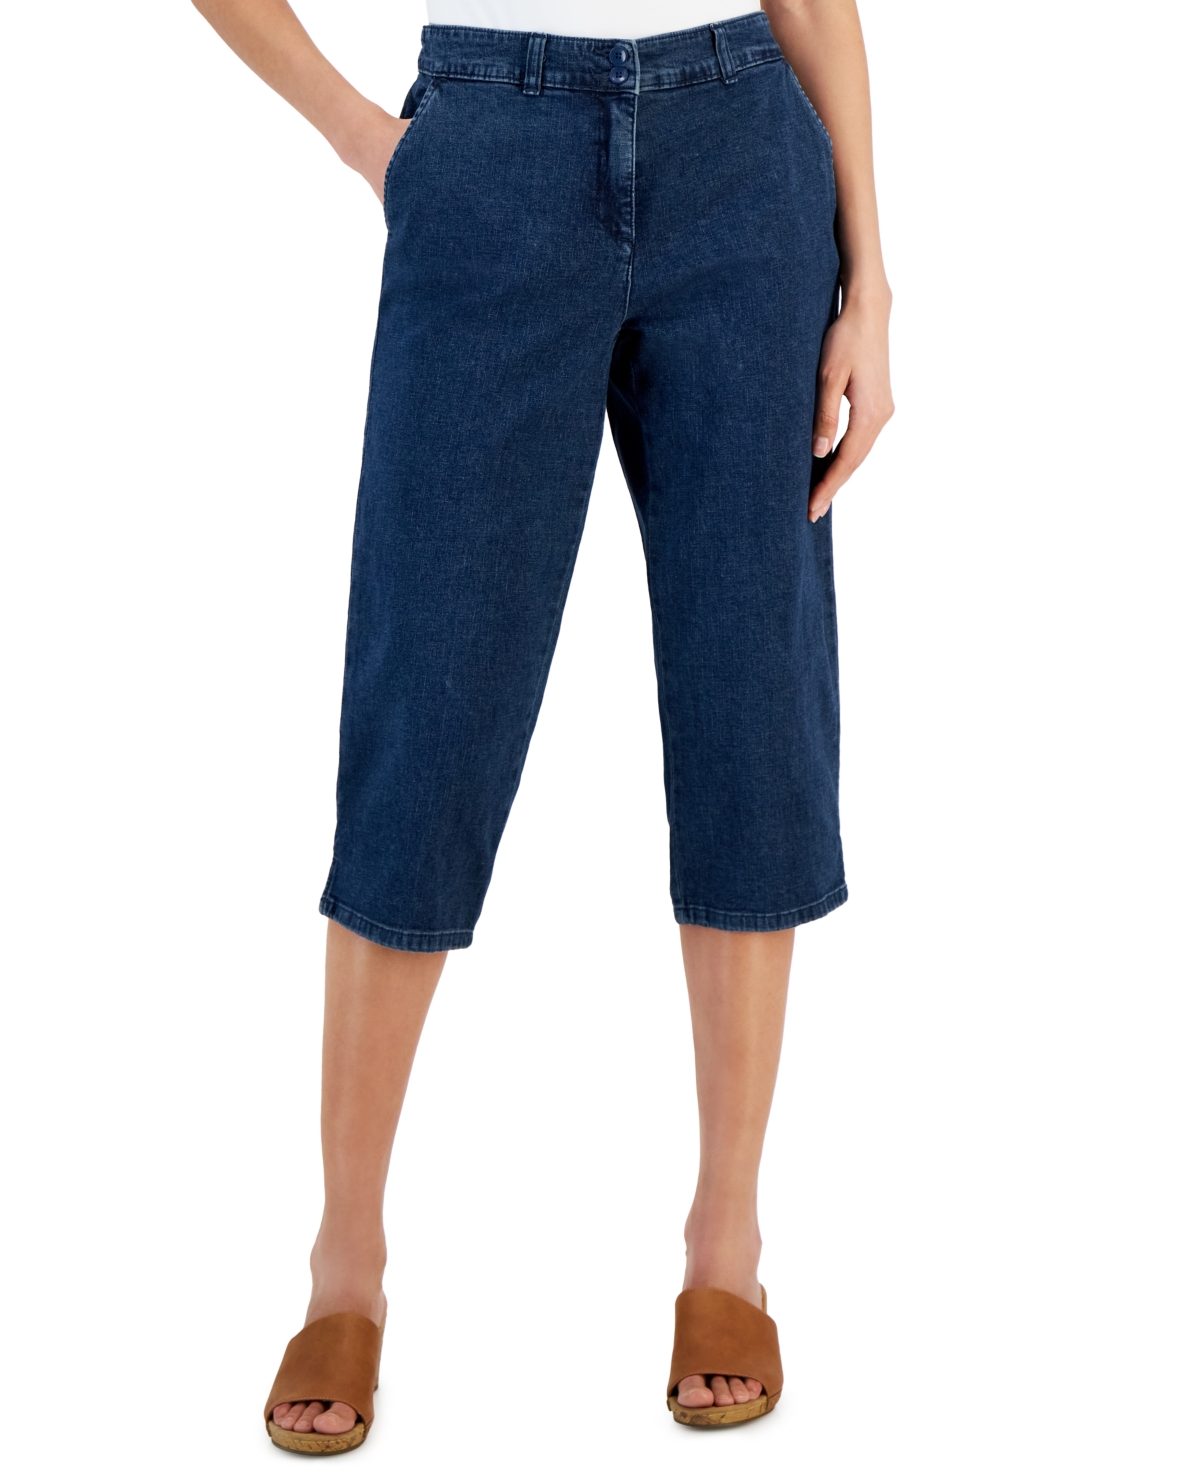 Karen Scott Petite Comfort Waist High-Rise Capri Pants, Created